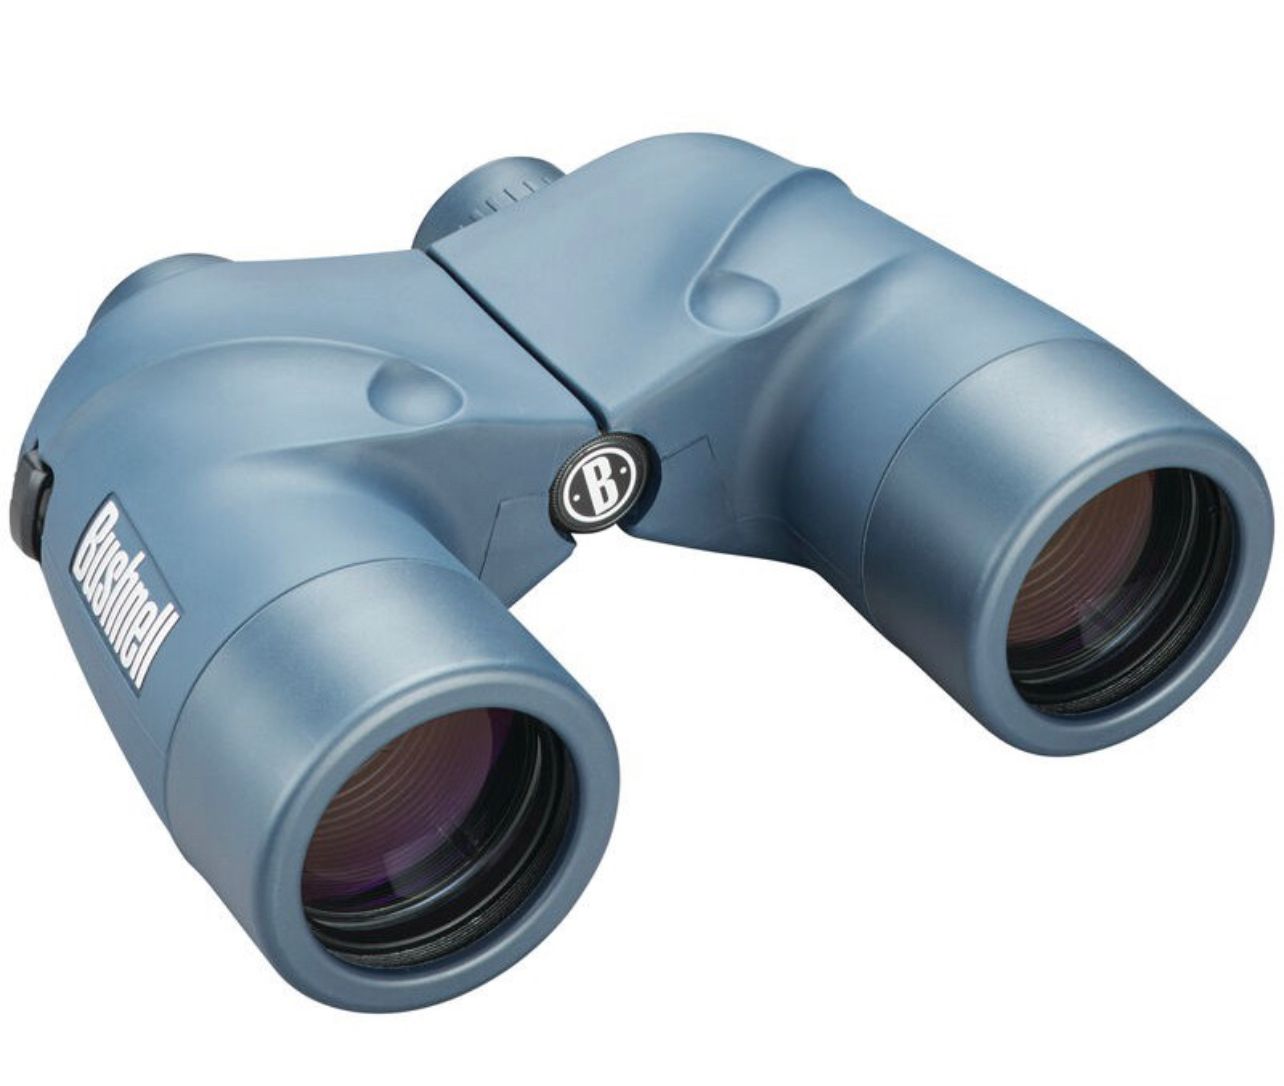 Bushnell Binoculars Marine 7x50 (137501) - Limited Lifetime Warranty